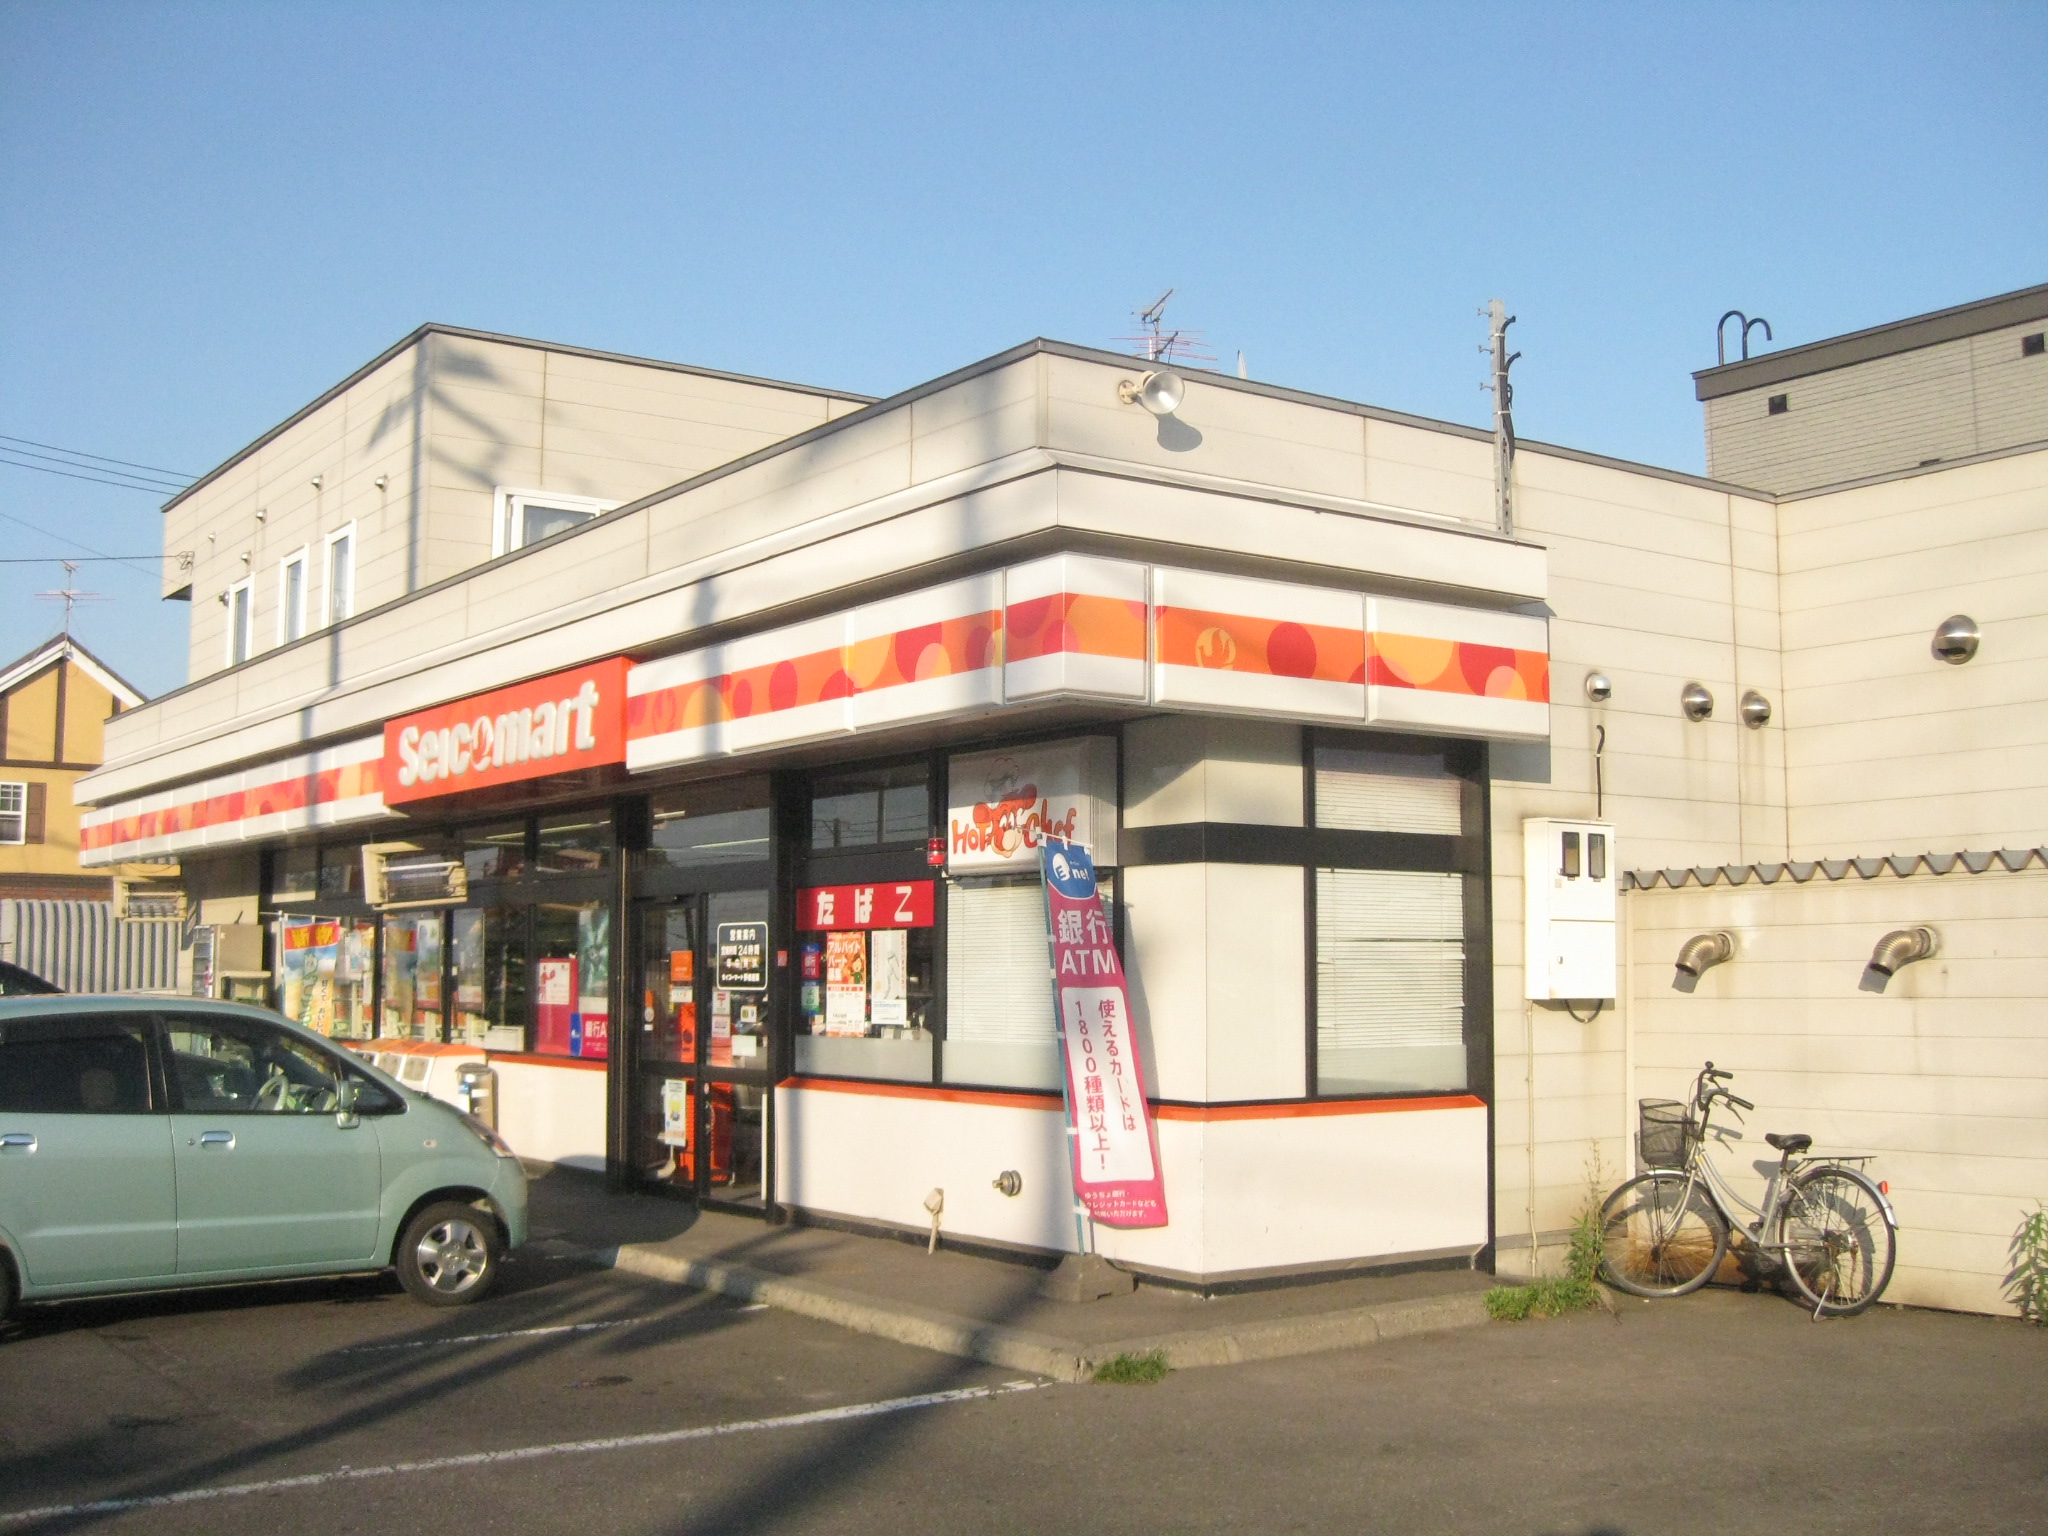 Convenience store. Seicomart Nopporowakaba store up (convenience store) 548m